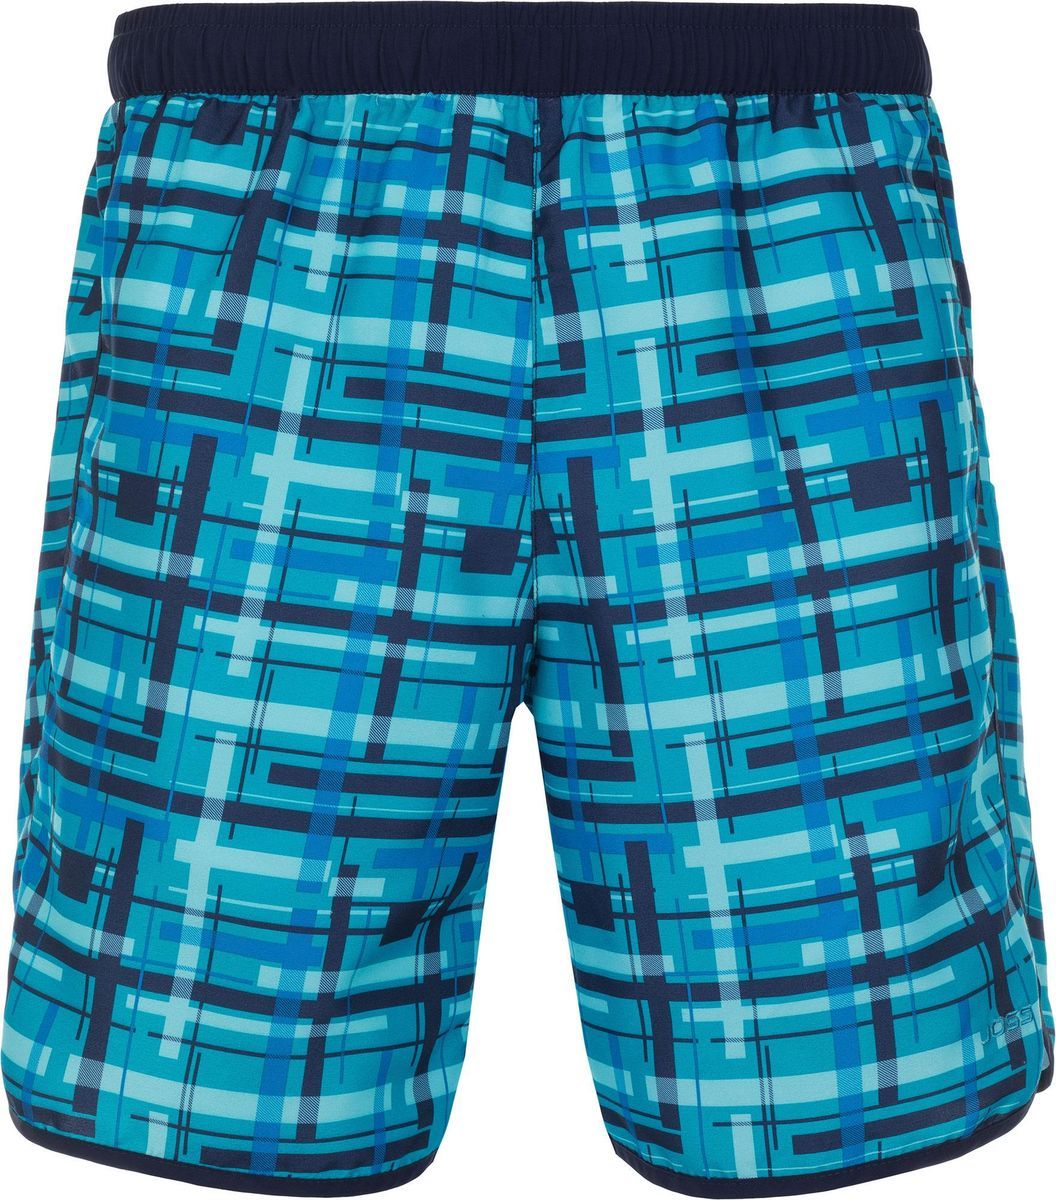   Joss Men's Shorts, . S17AJSSHM02-MU.  52